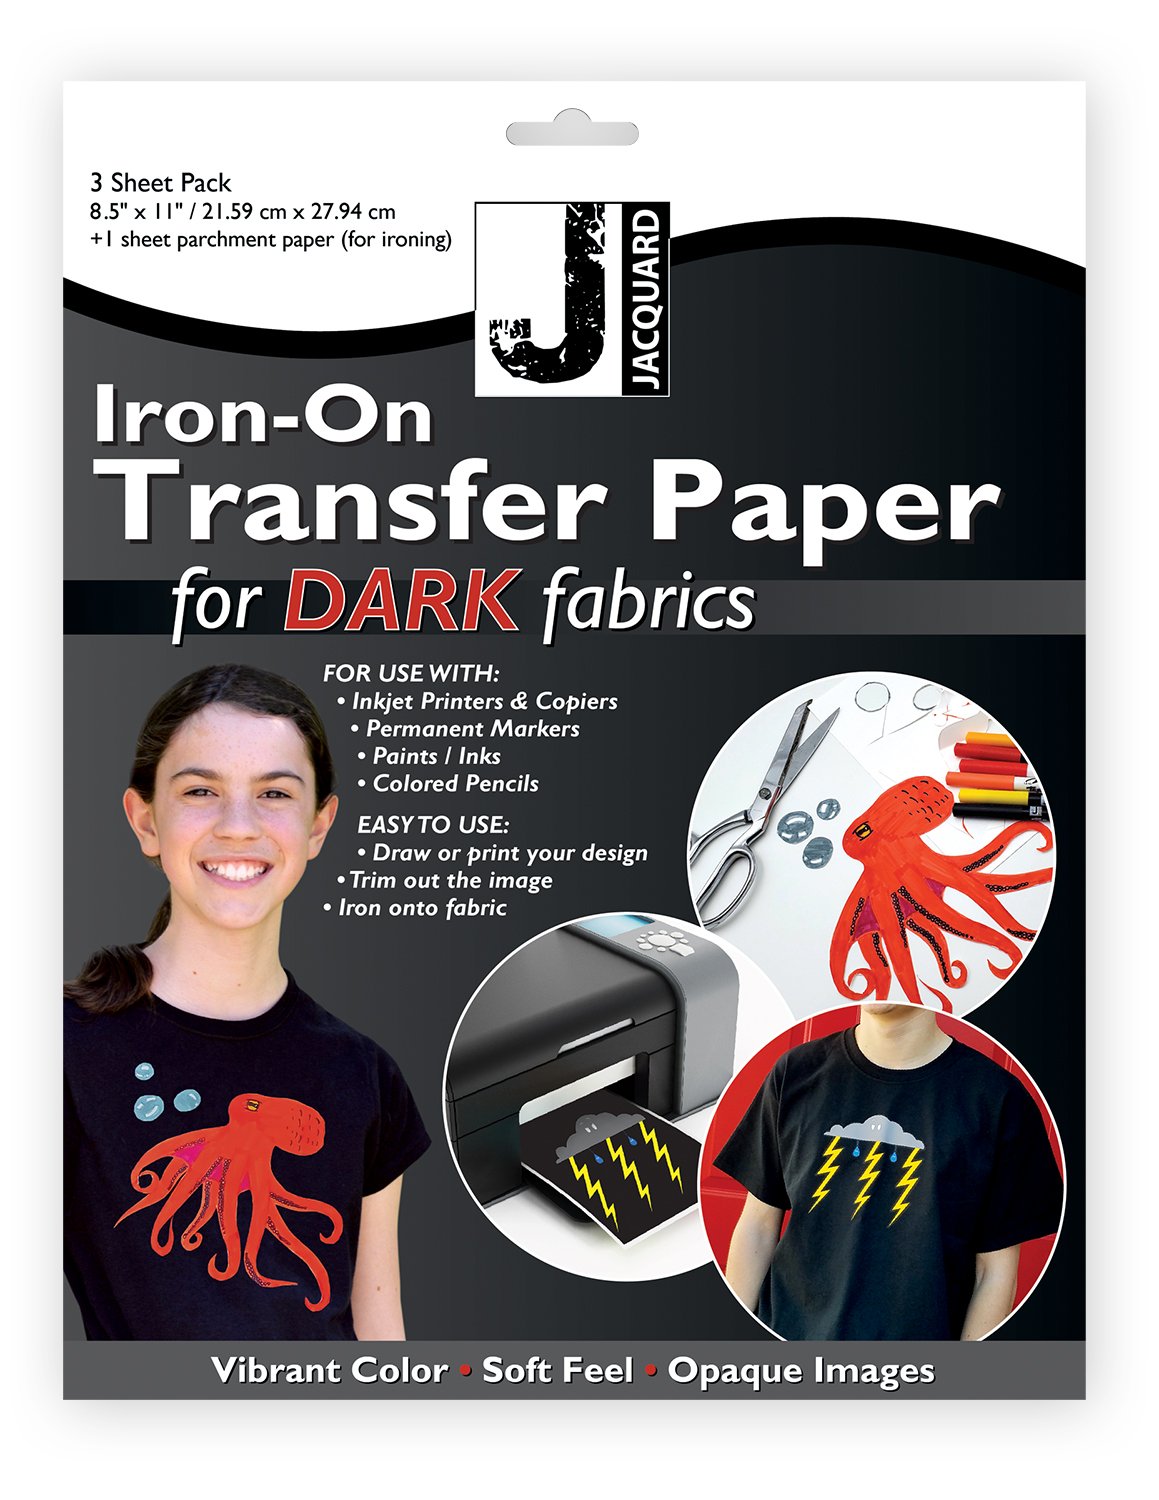 Laser transfer paper for dark color fabric